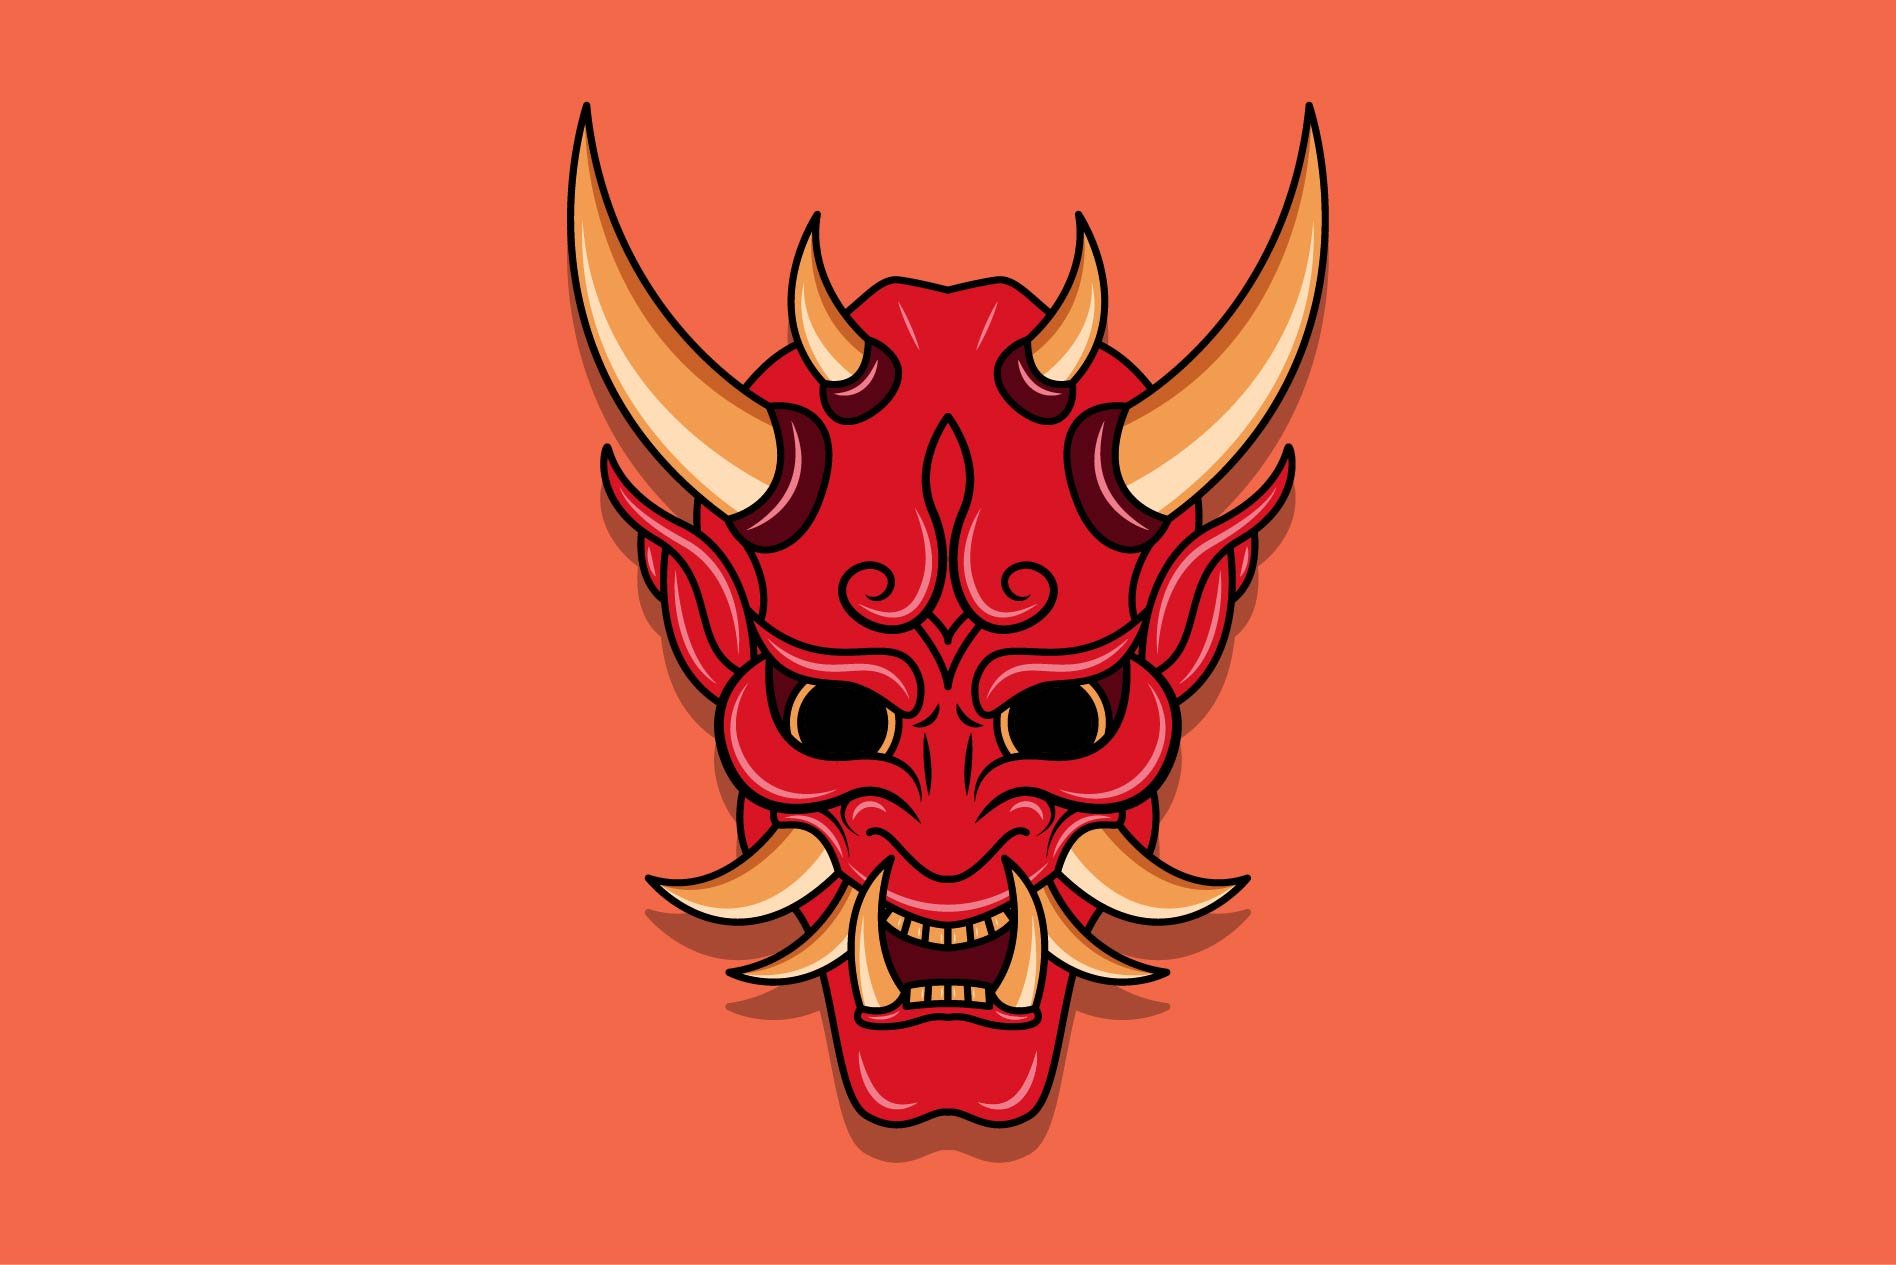 Oni japanese devil mask #13 cover image.